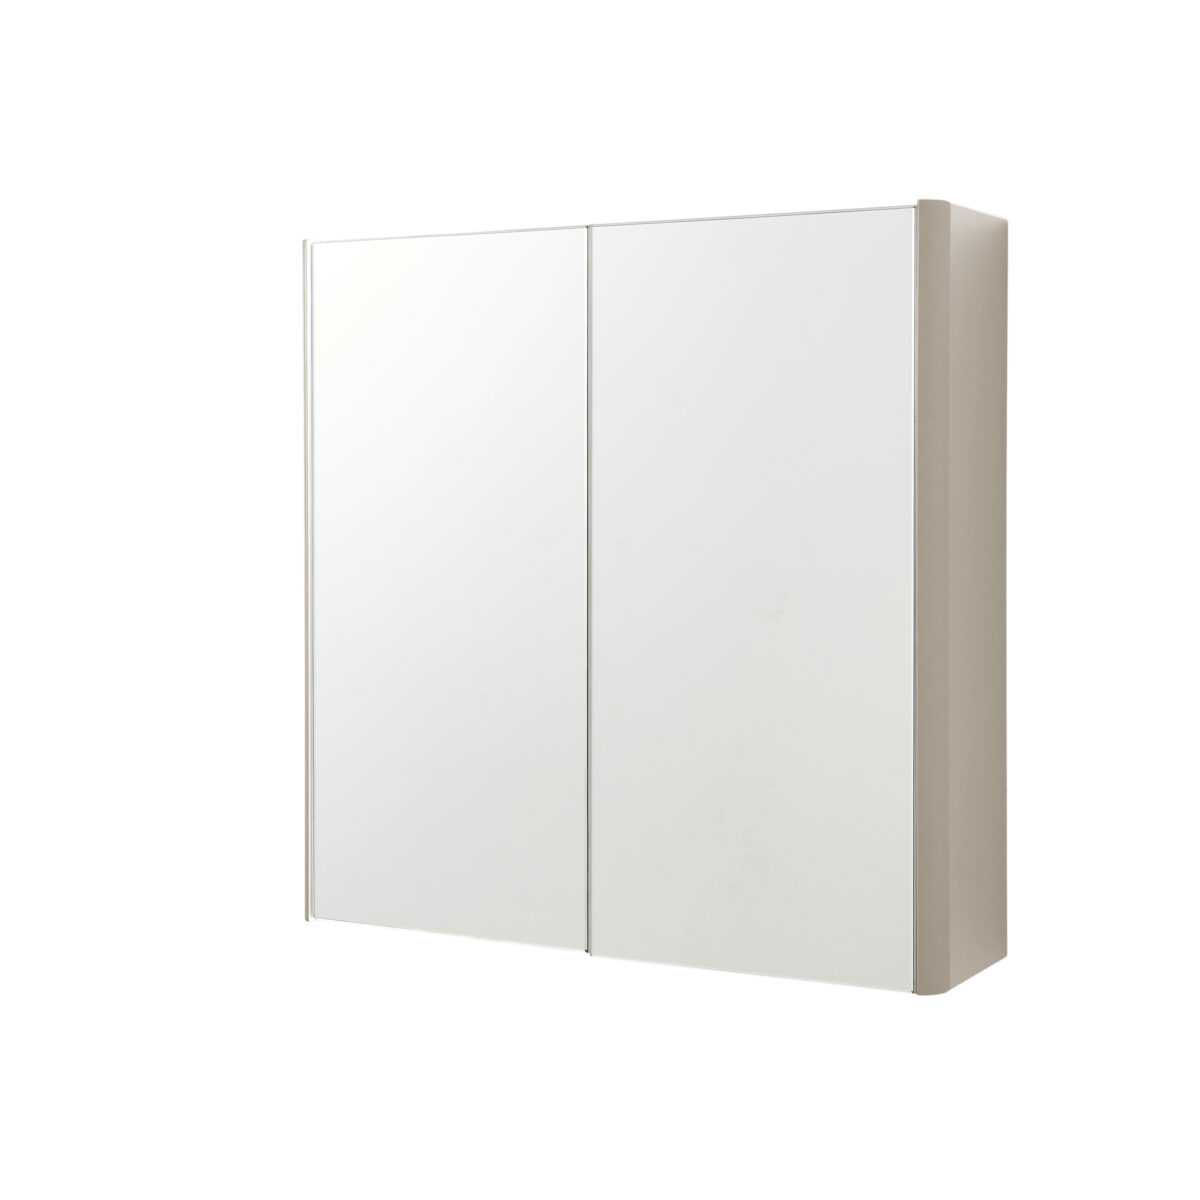 Mirror Cabinet - Arc Cashmere - Premier Tiles and Bathrooms